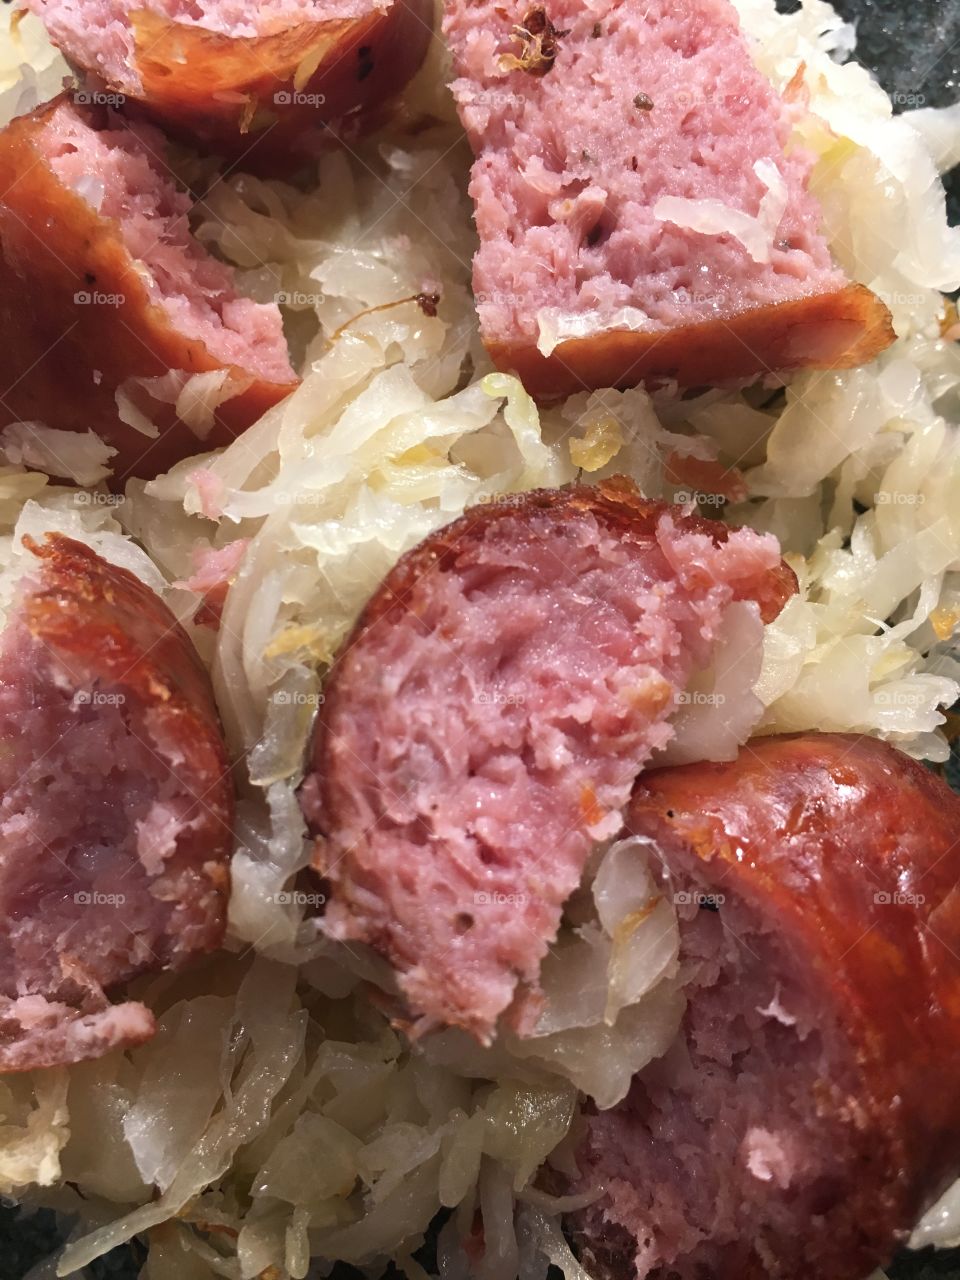 Sauerkraut and farmers sausage 